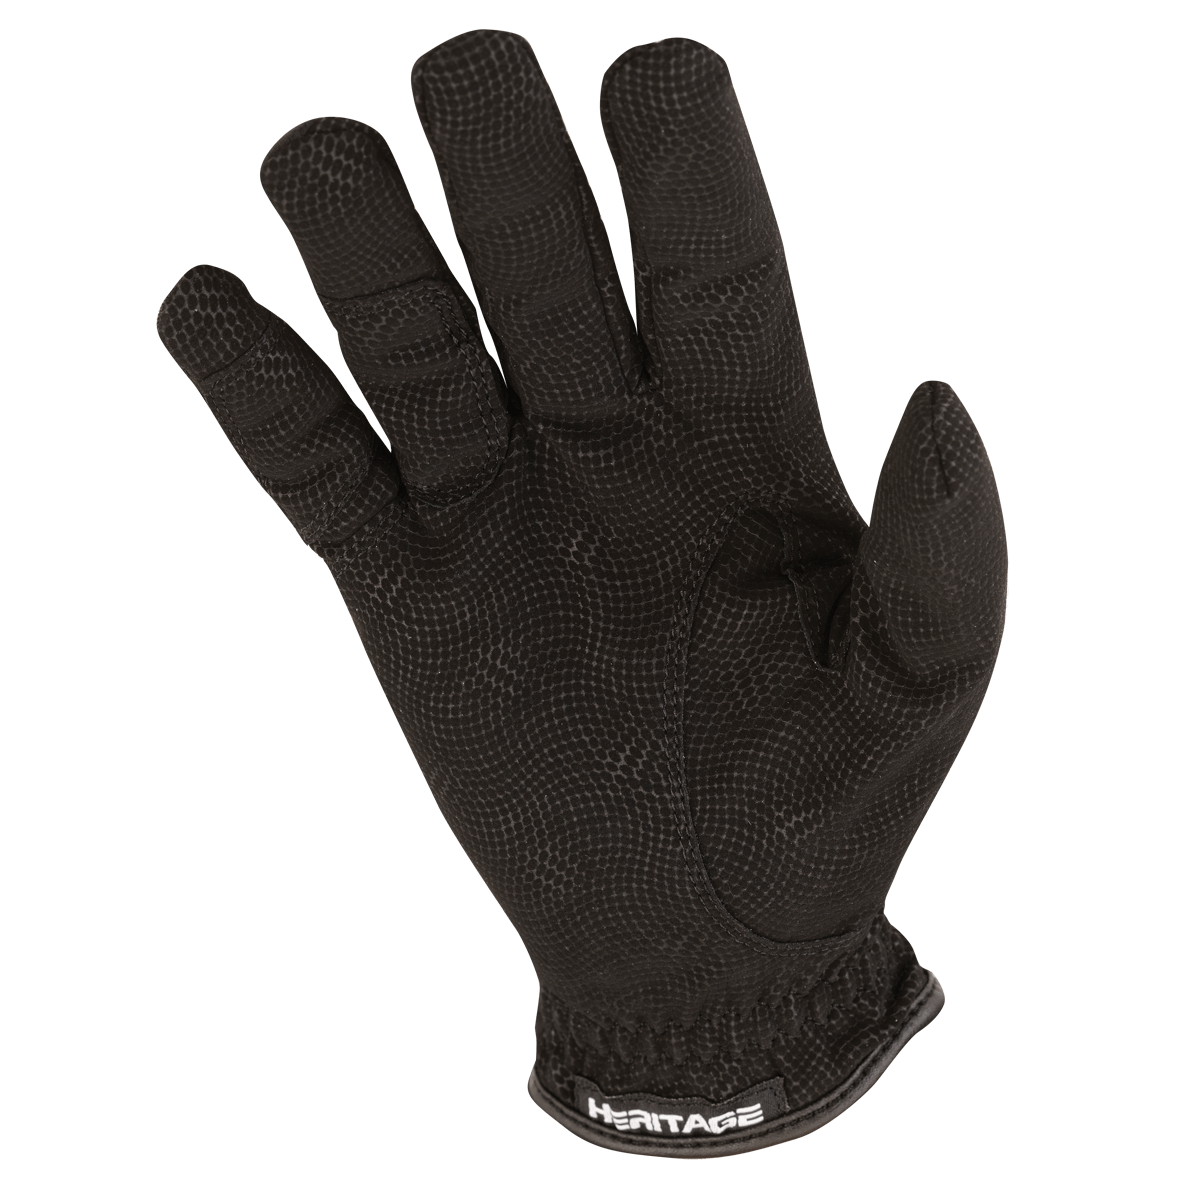 Heritage Spectrum Winter Gloves